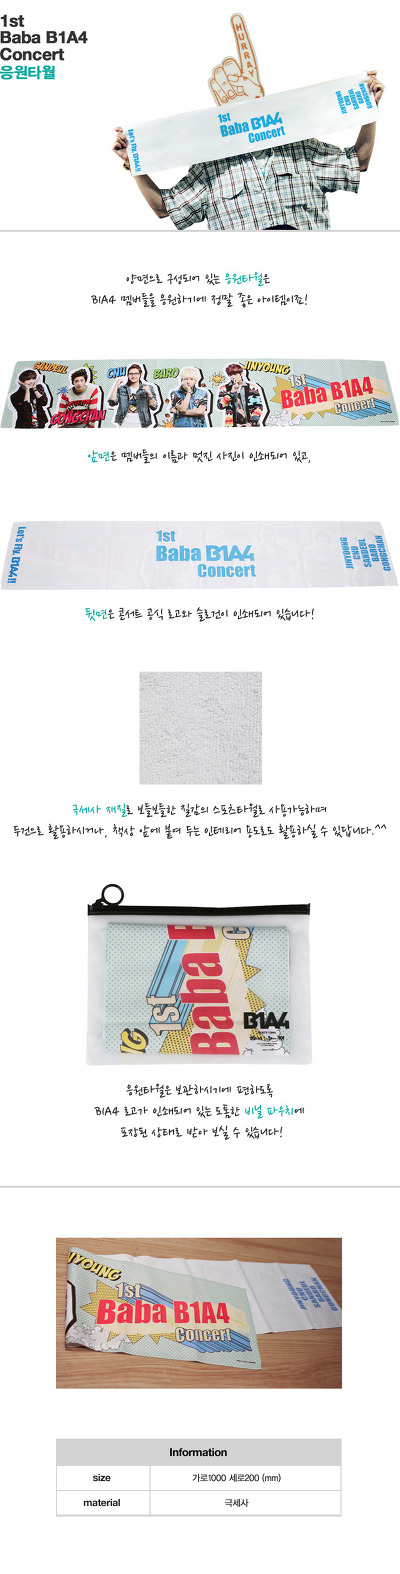 B1A4 1st Concert [BABAB1A4] 콘서트 굿즈 "응원타월" | 인스티즈